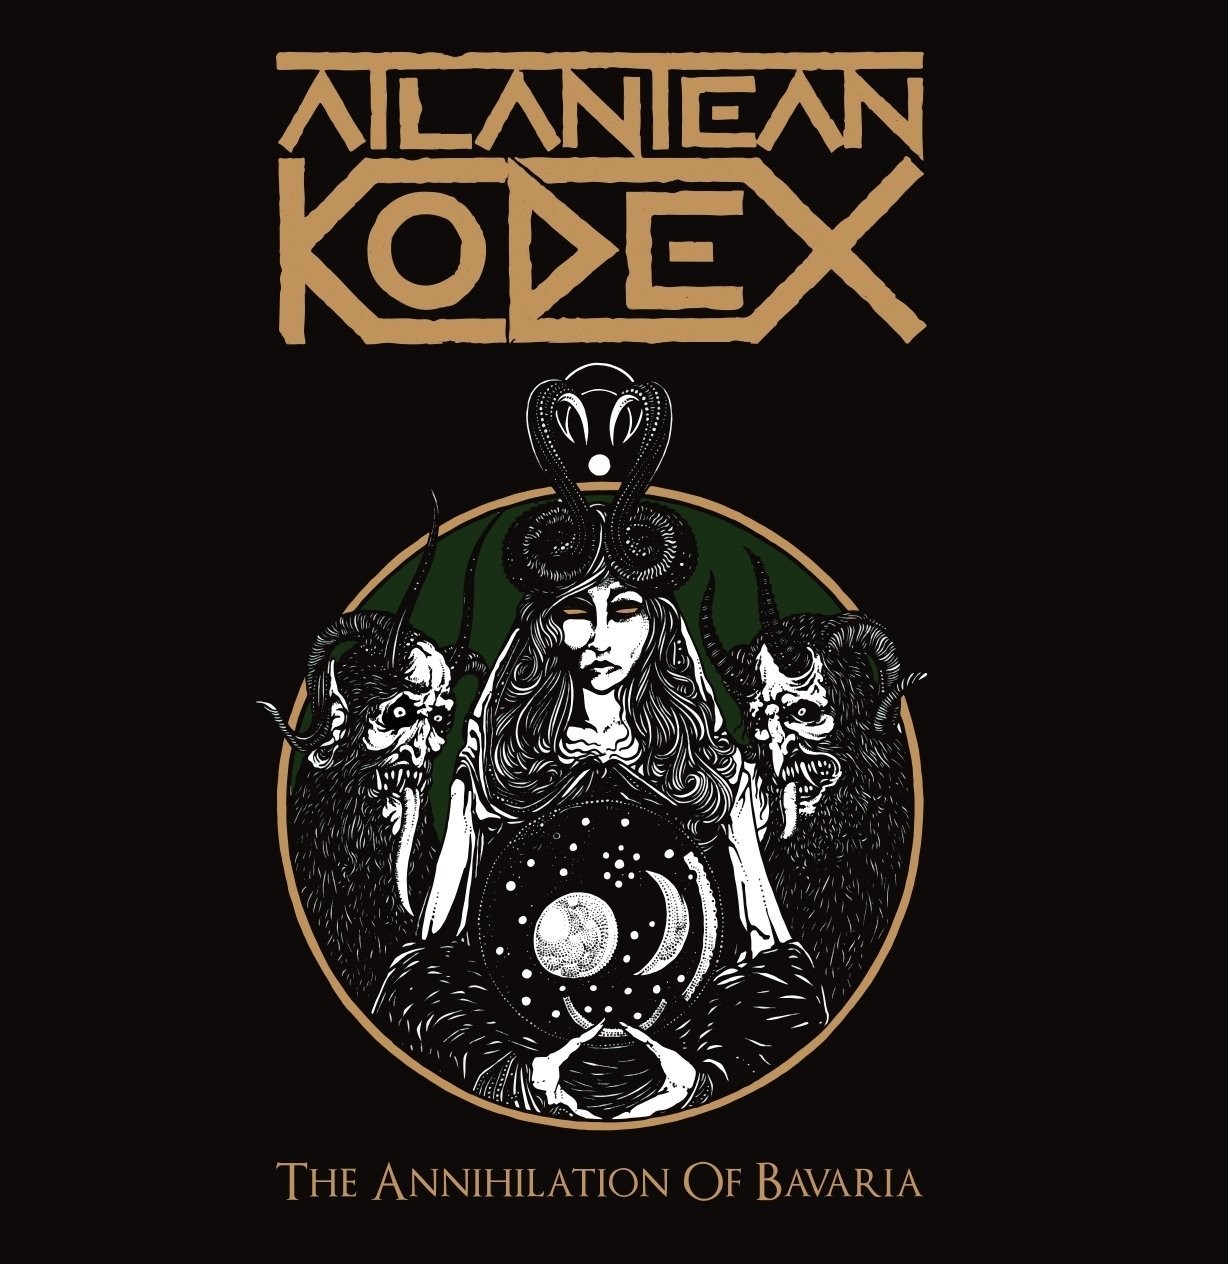 Atlantean Kodex - The Annihilation Of Bavaria